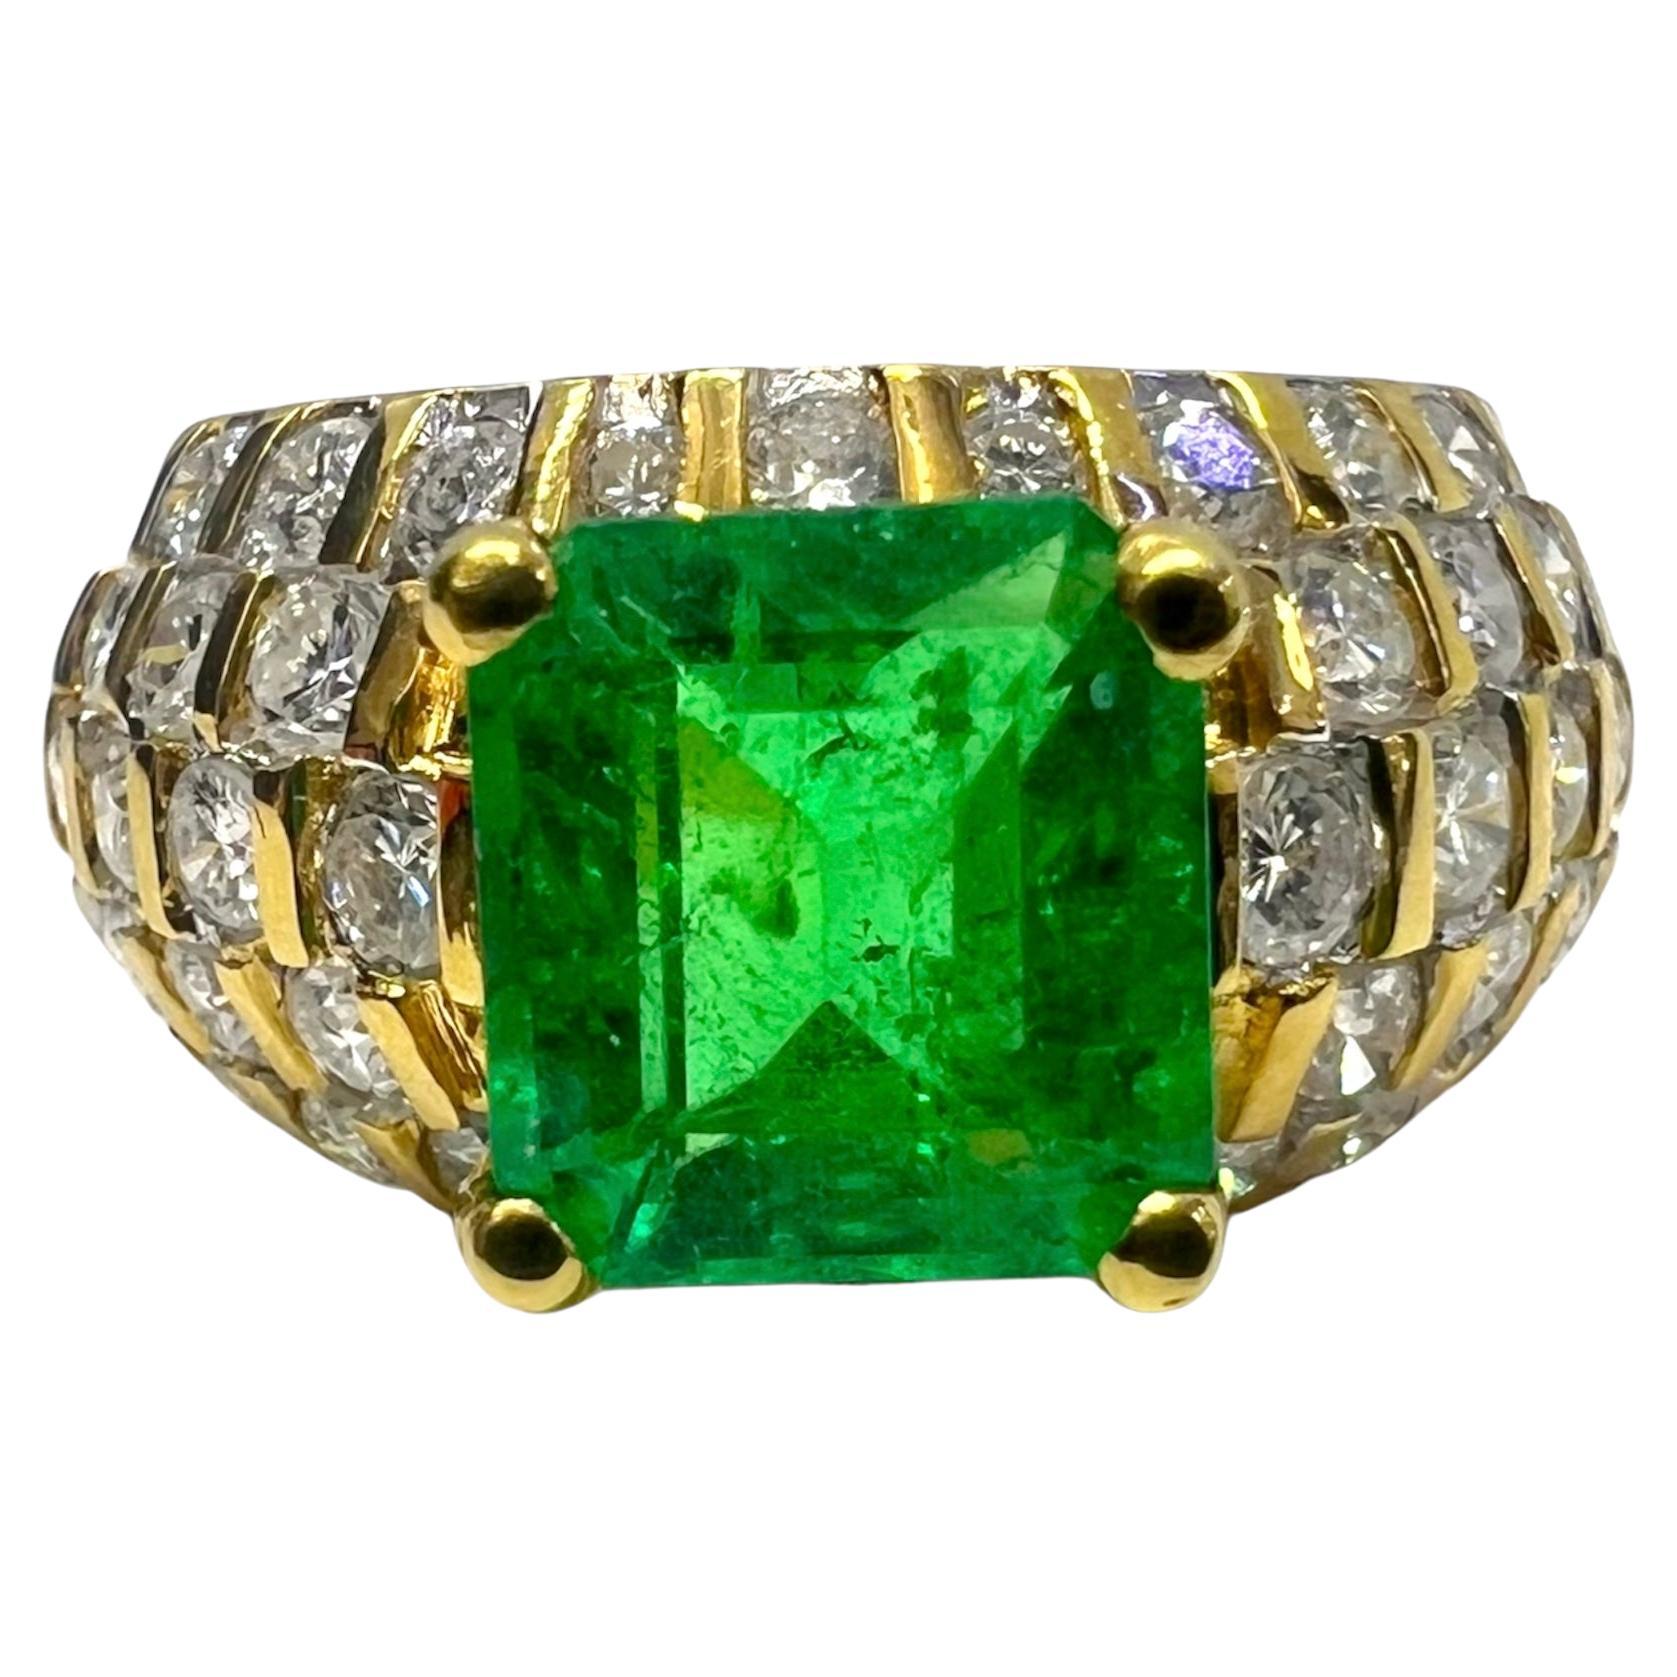 Sophia D. 18K Yellow Gold Emerald and Diamond Ring